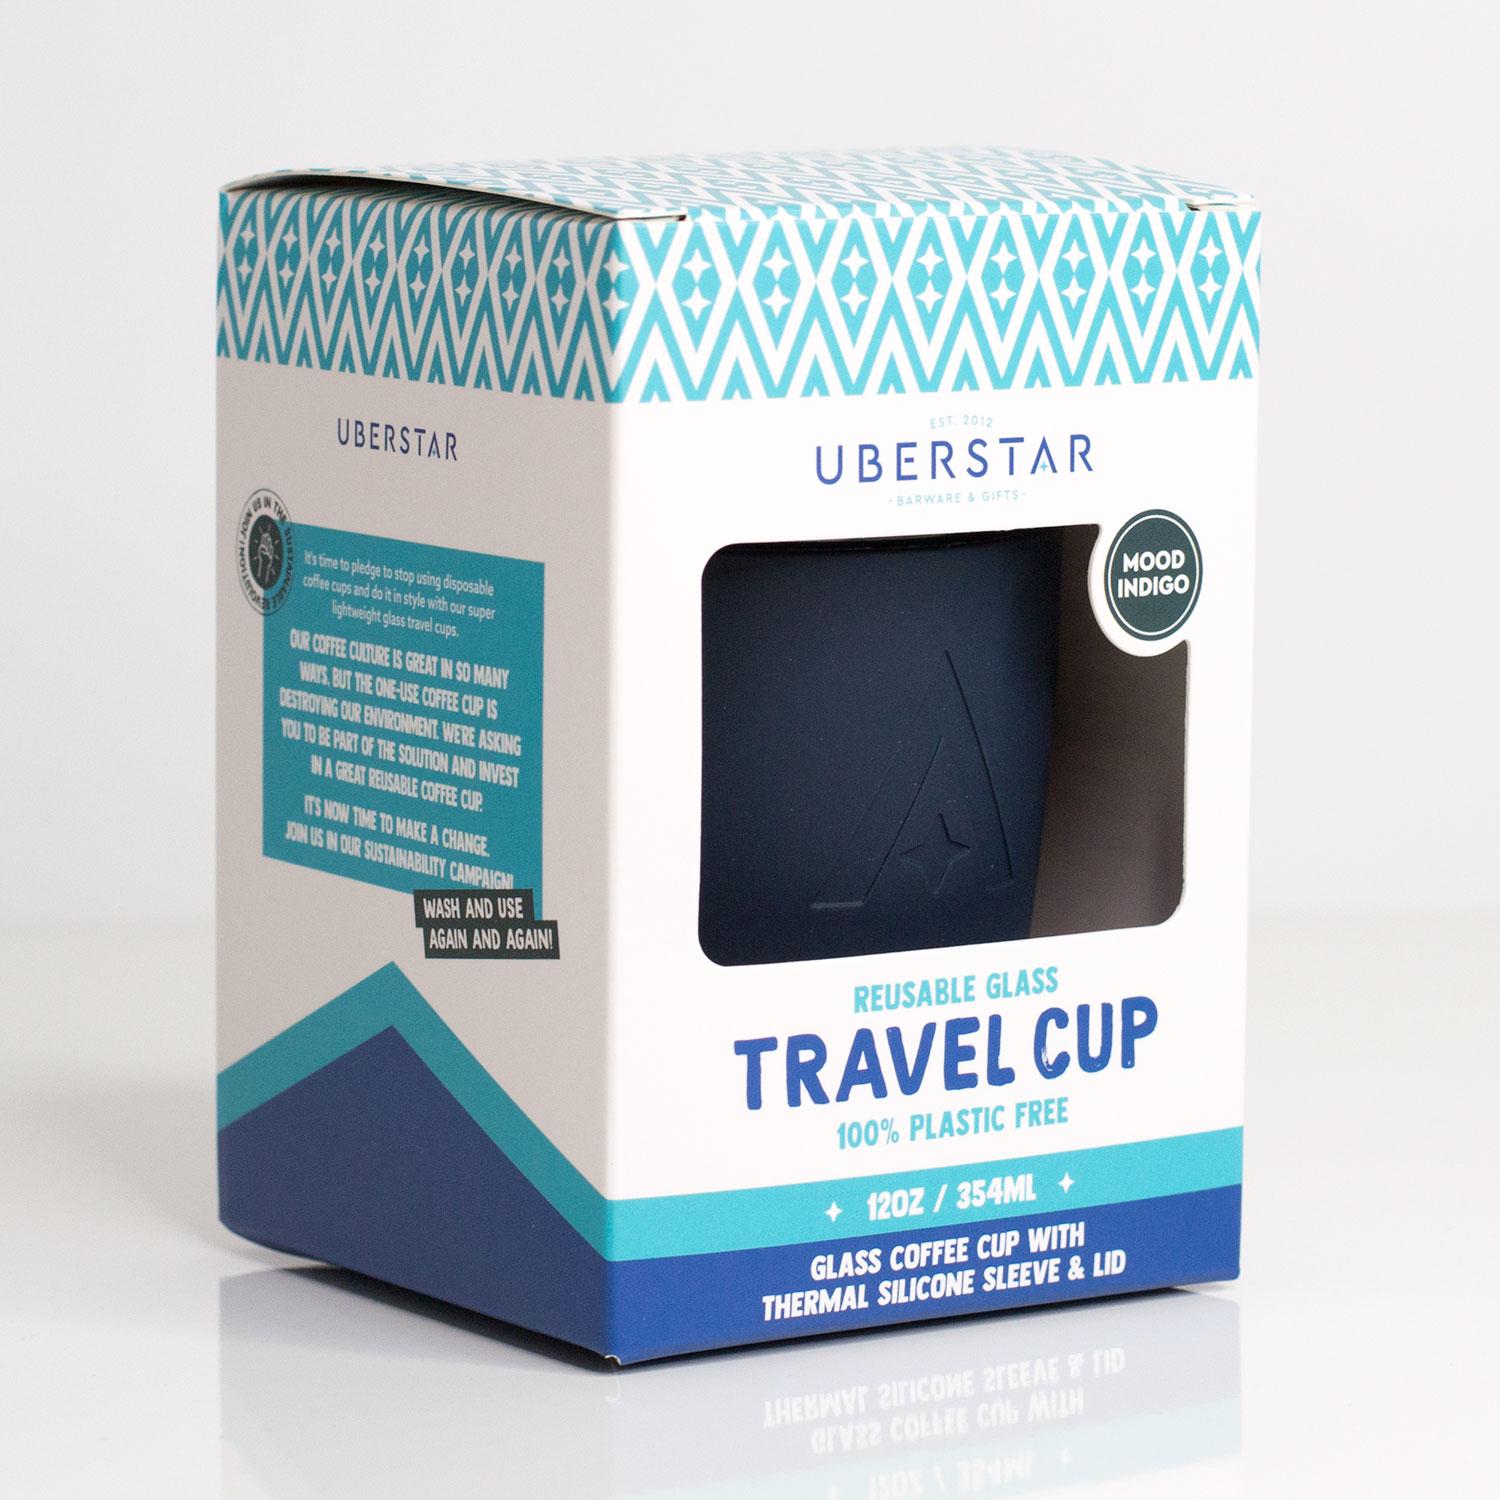 Uberstar Reusable Glass Travel Cup - Mood Indigo - Only £14.99